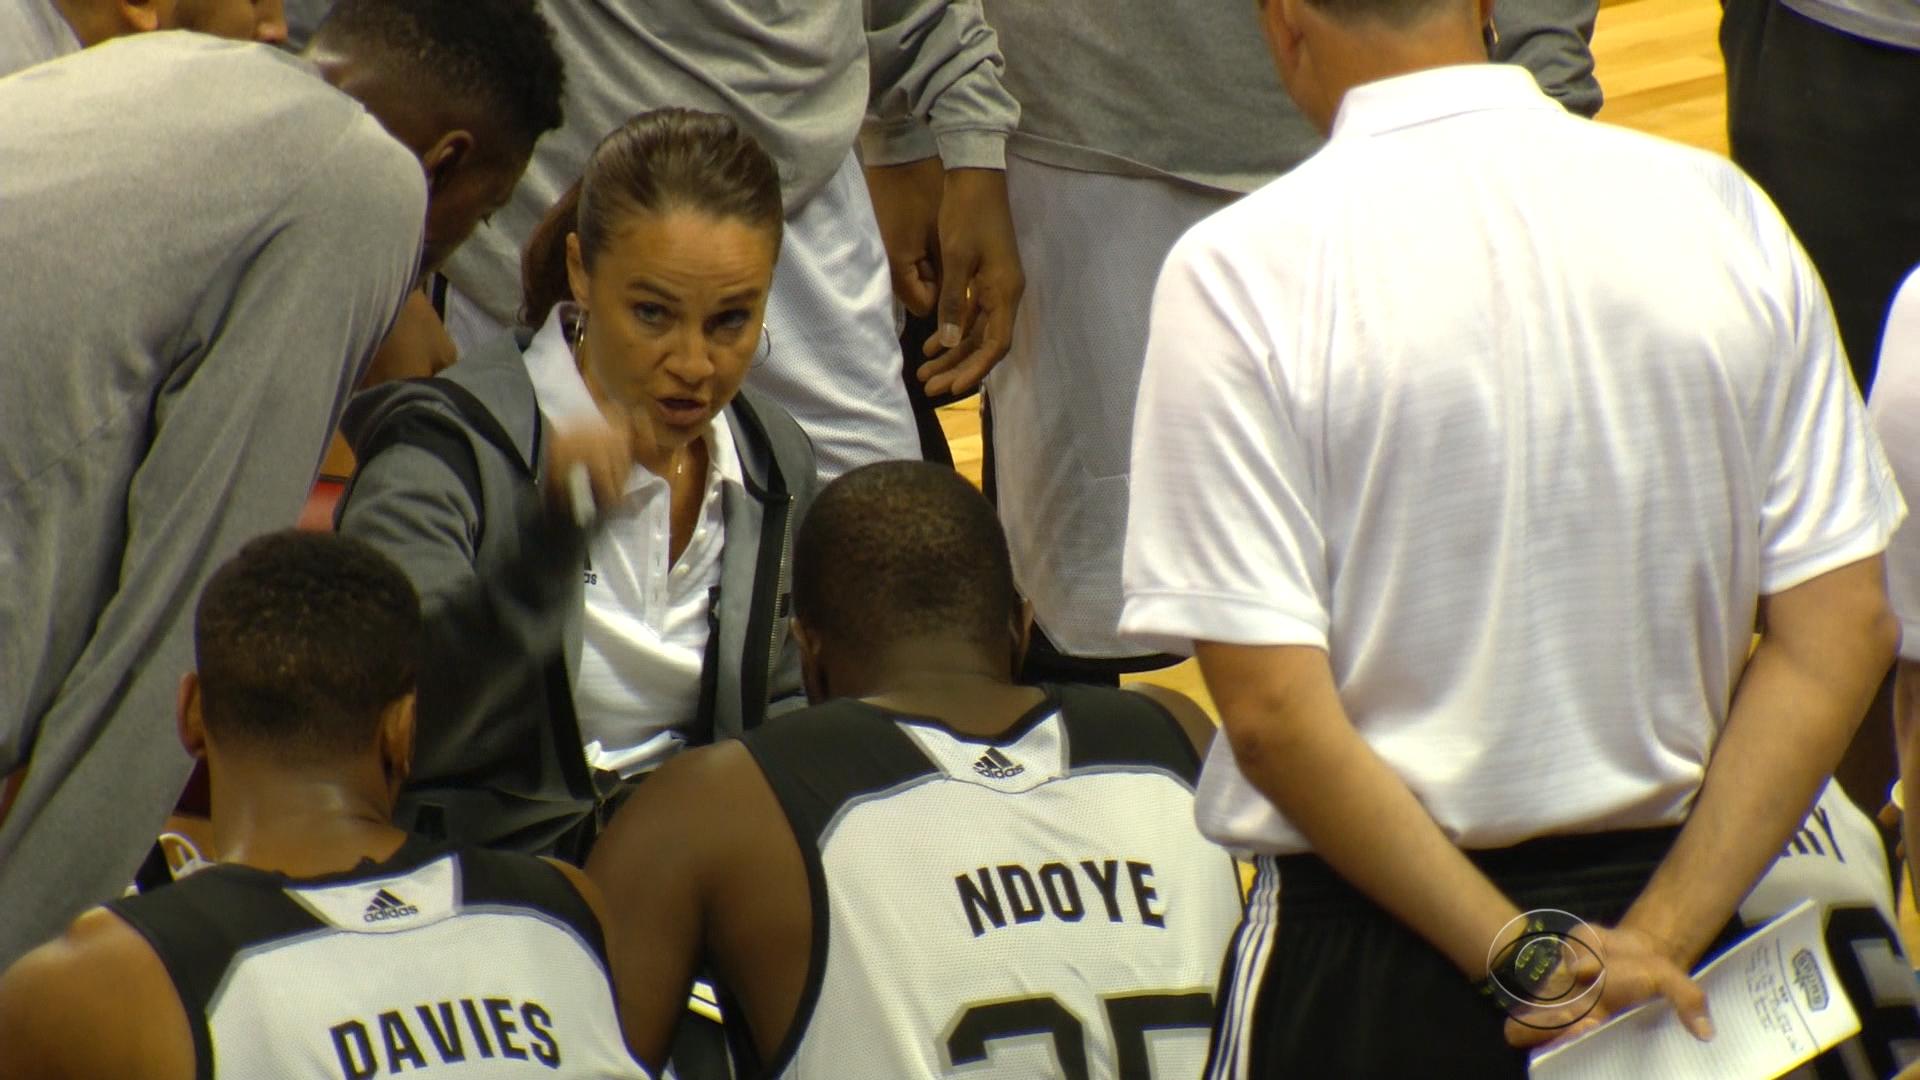 Female coach breaks glass ceiling in male dominated NBA - CBS News